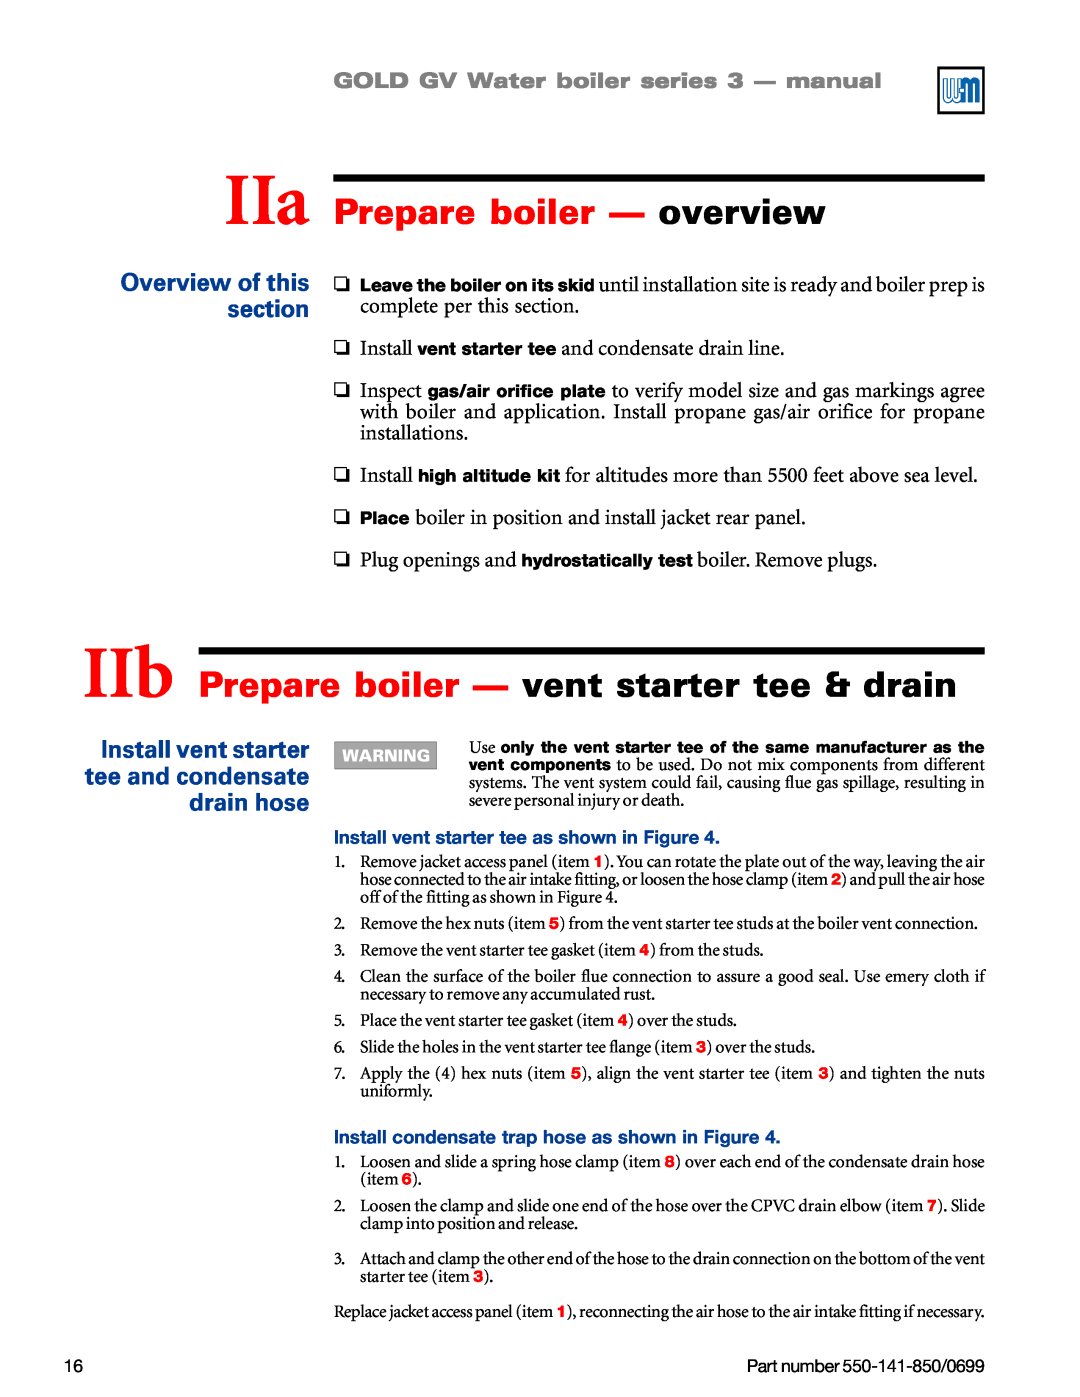 Weil-McLain GOLD DV WATER BOILER manual IIa Prepare boiler — overview, IIb Prepare boiler — vent starter tee & drain 